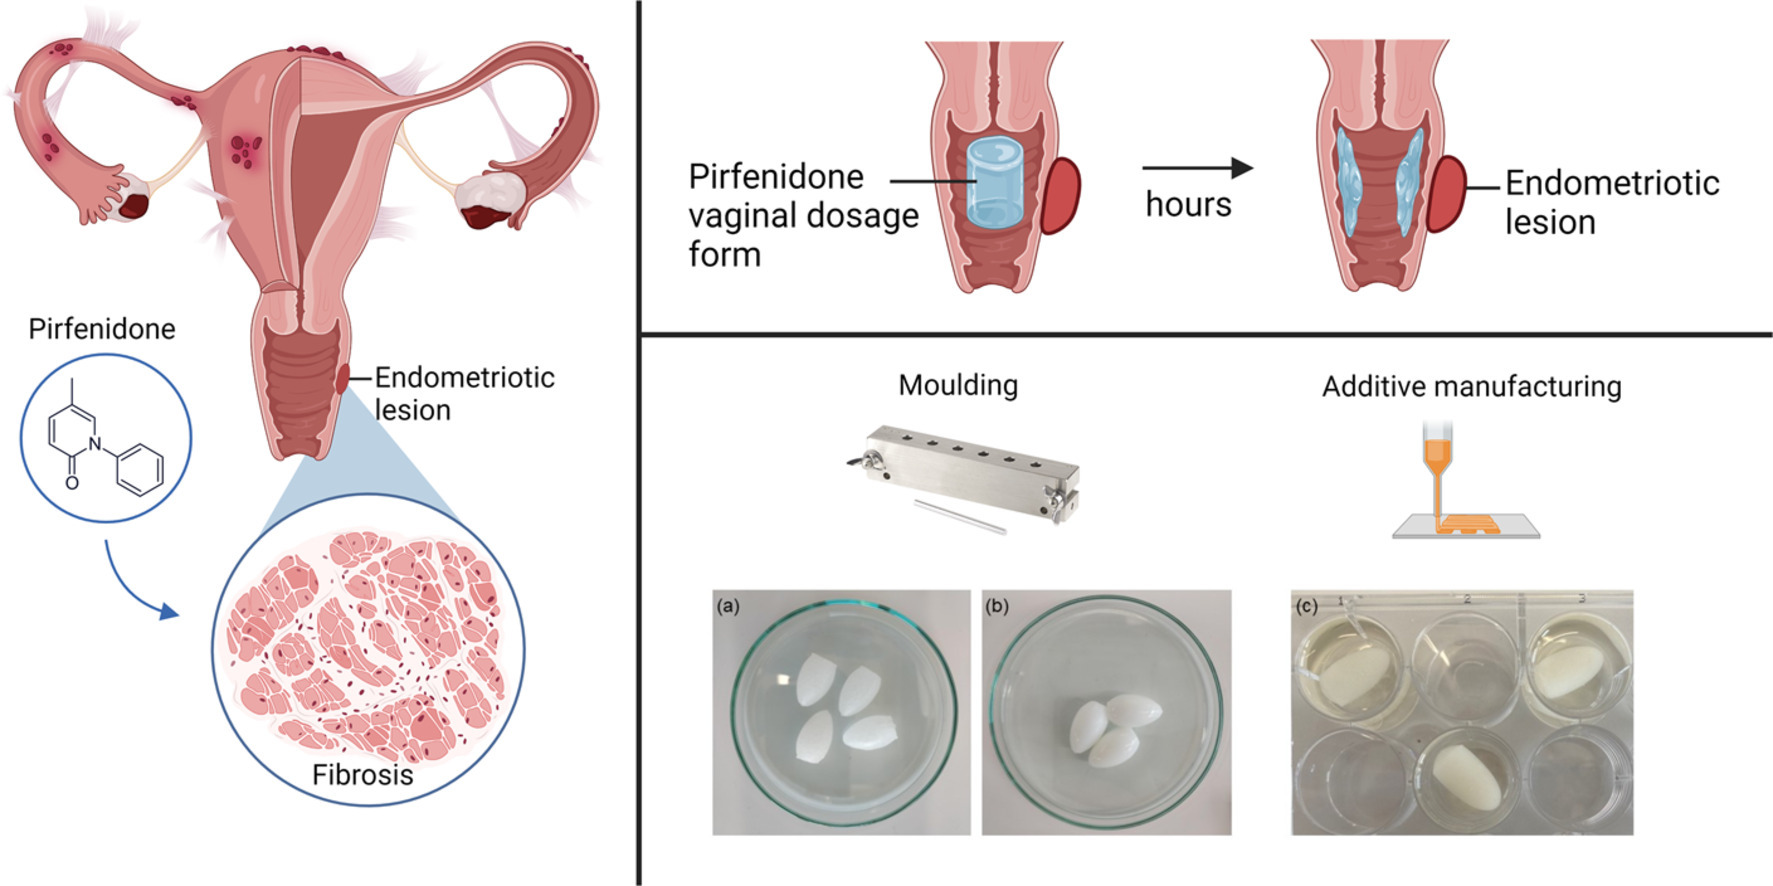 Mucoadhesive 3D printed vaginal ovules to treat endometriosis and fibrotic uterine diseases